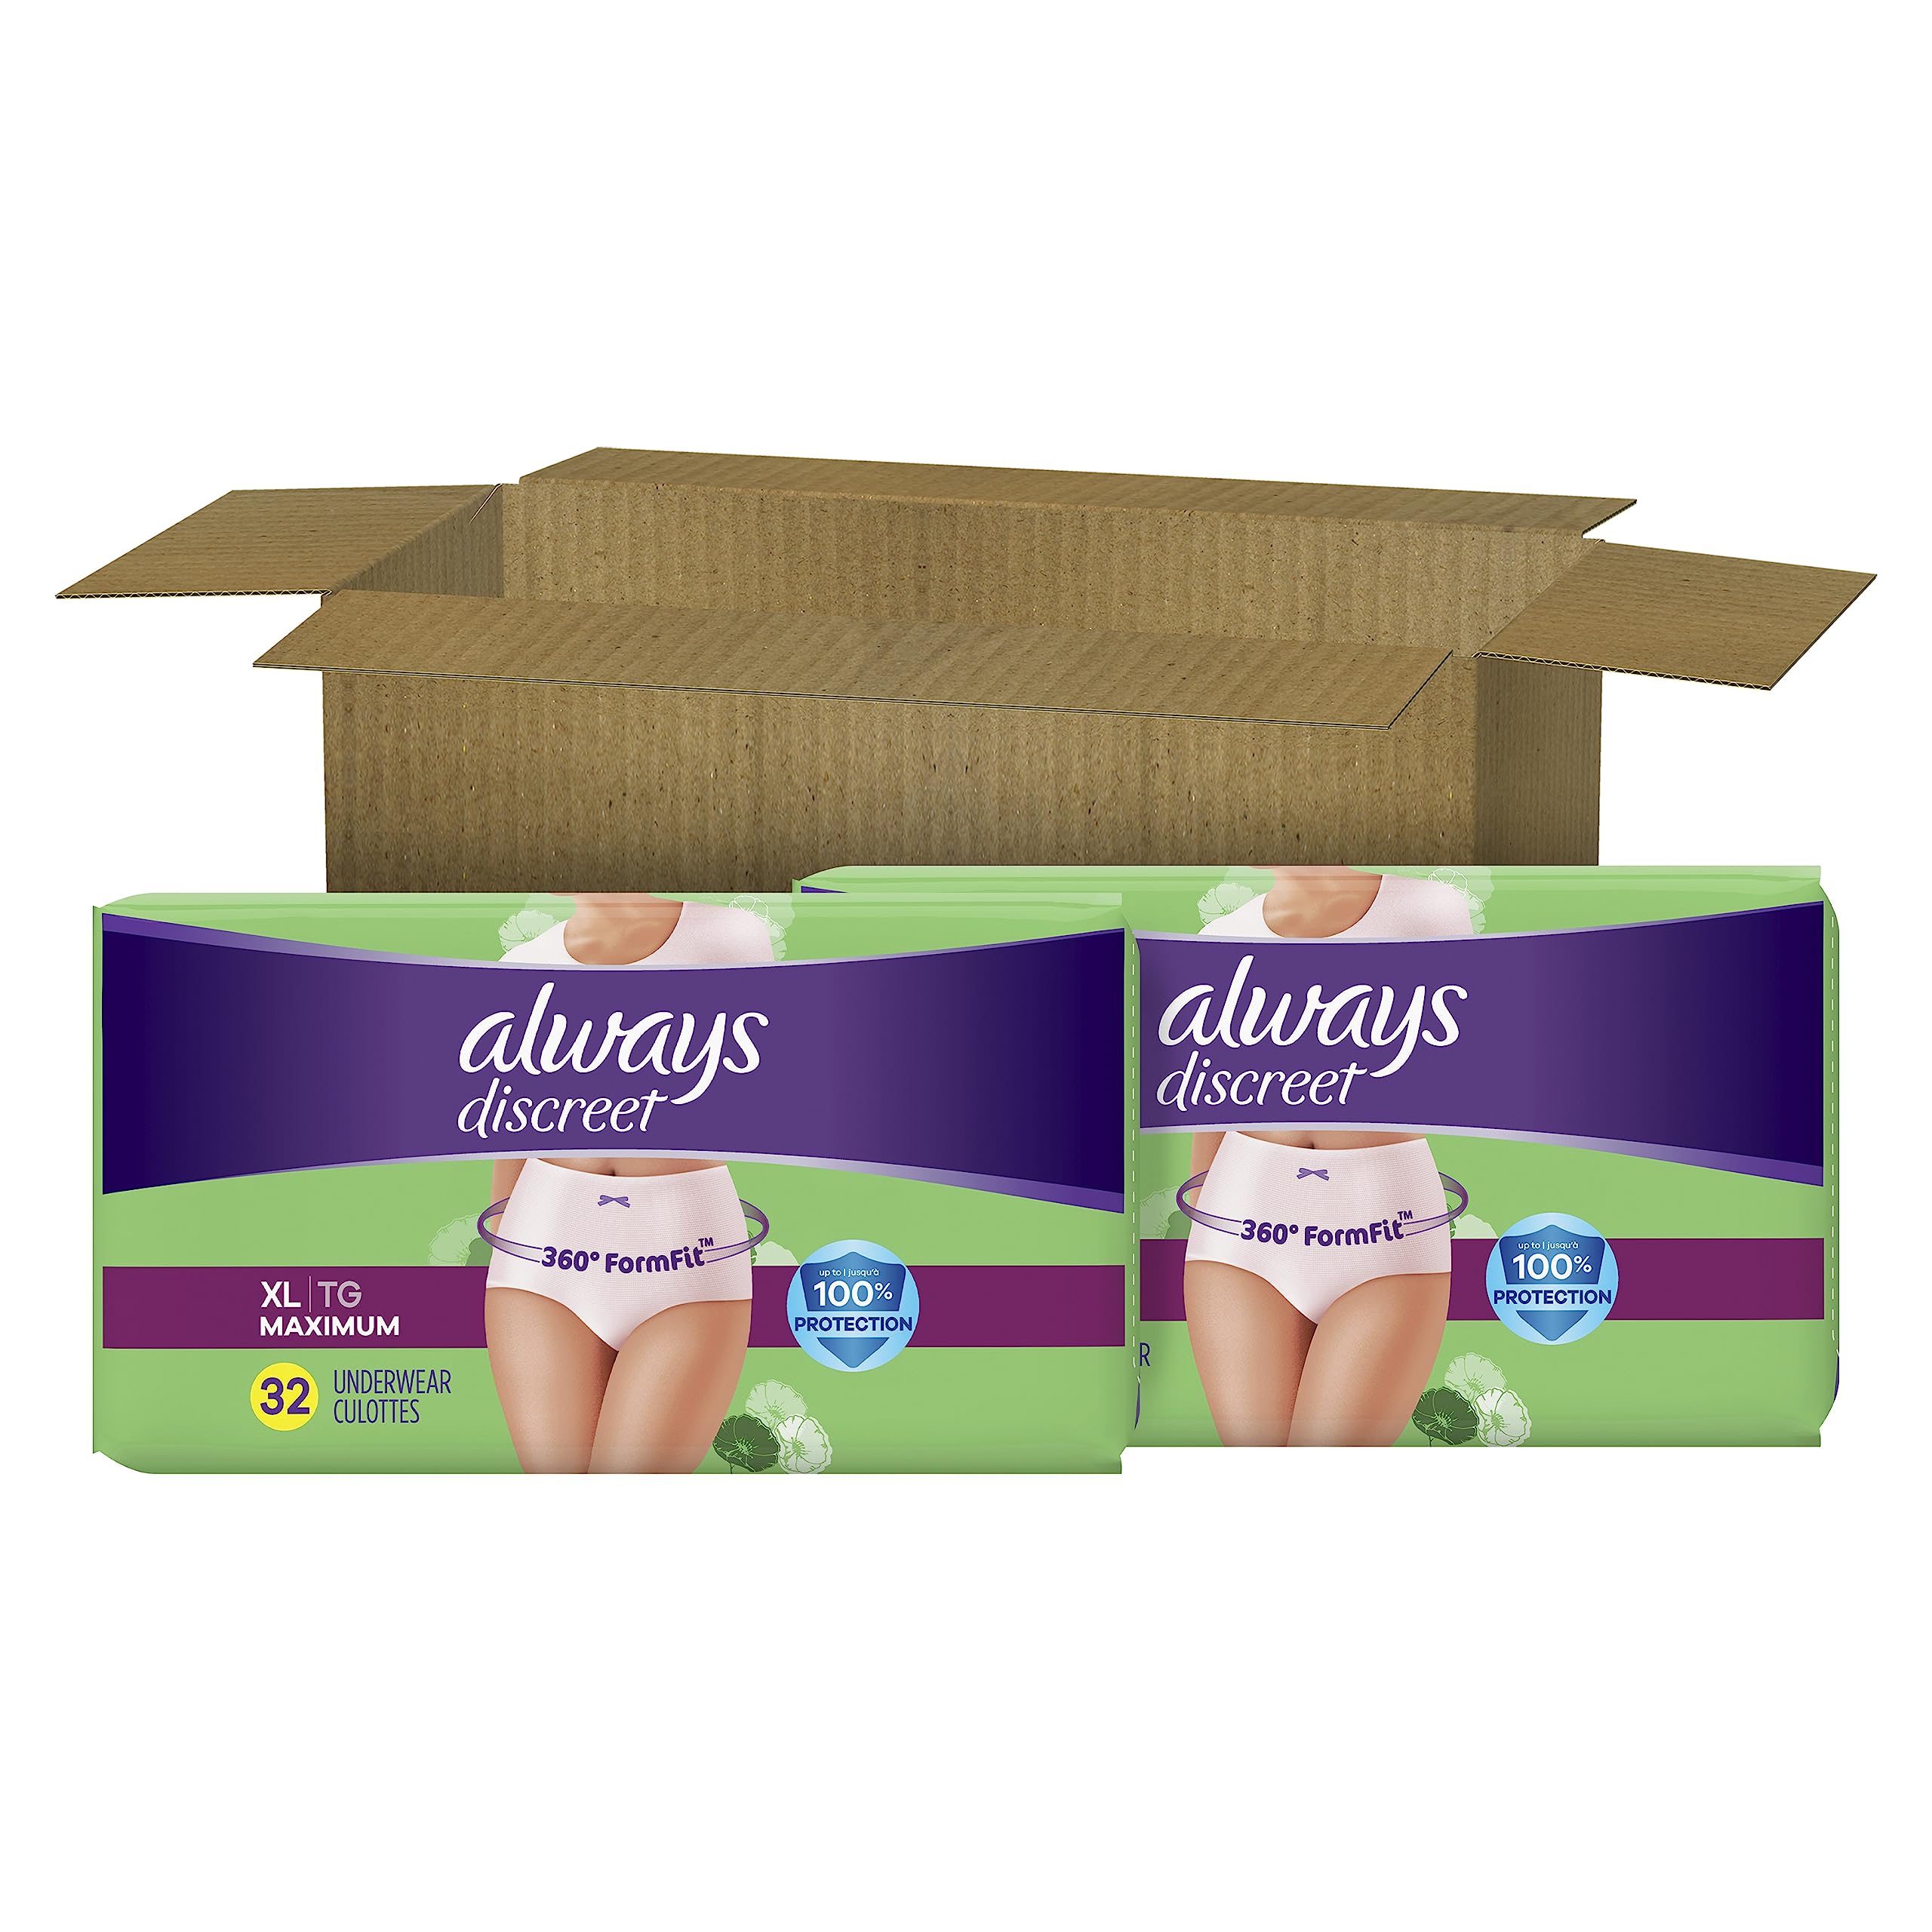 Always Discreet Adult Incontinence Underwear for Women and Postpartum Underwear, XL, 64 CT, up to 100% Bladder Leak Protection